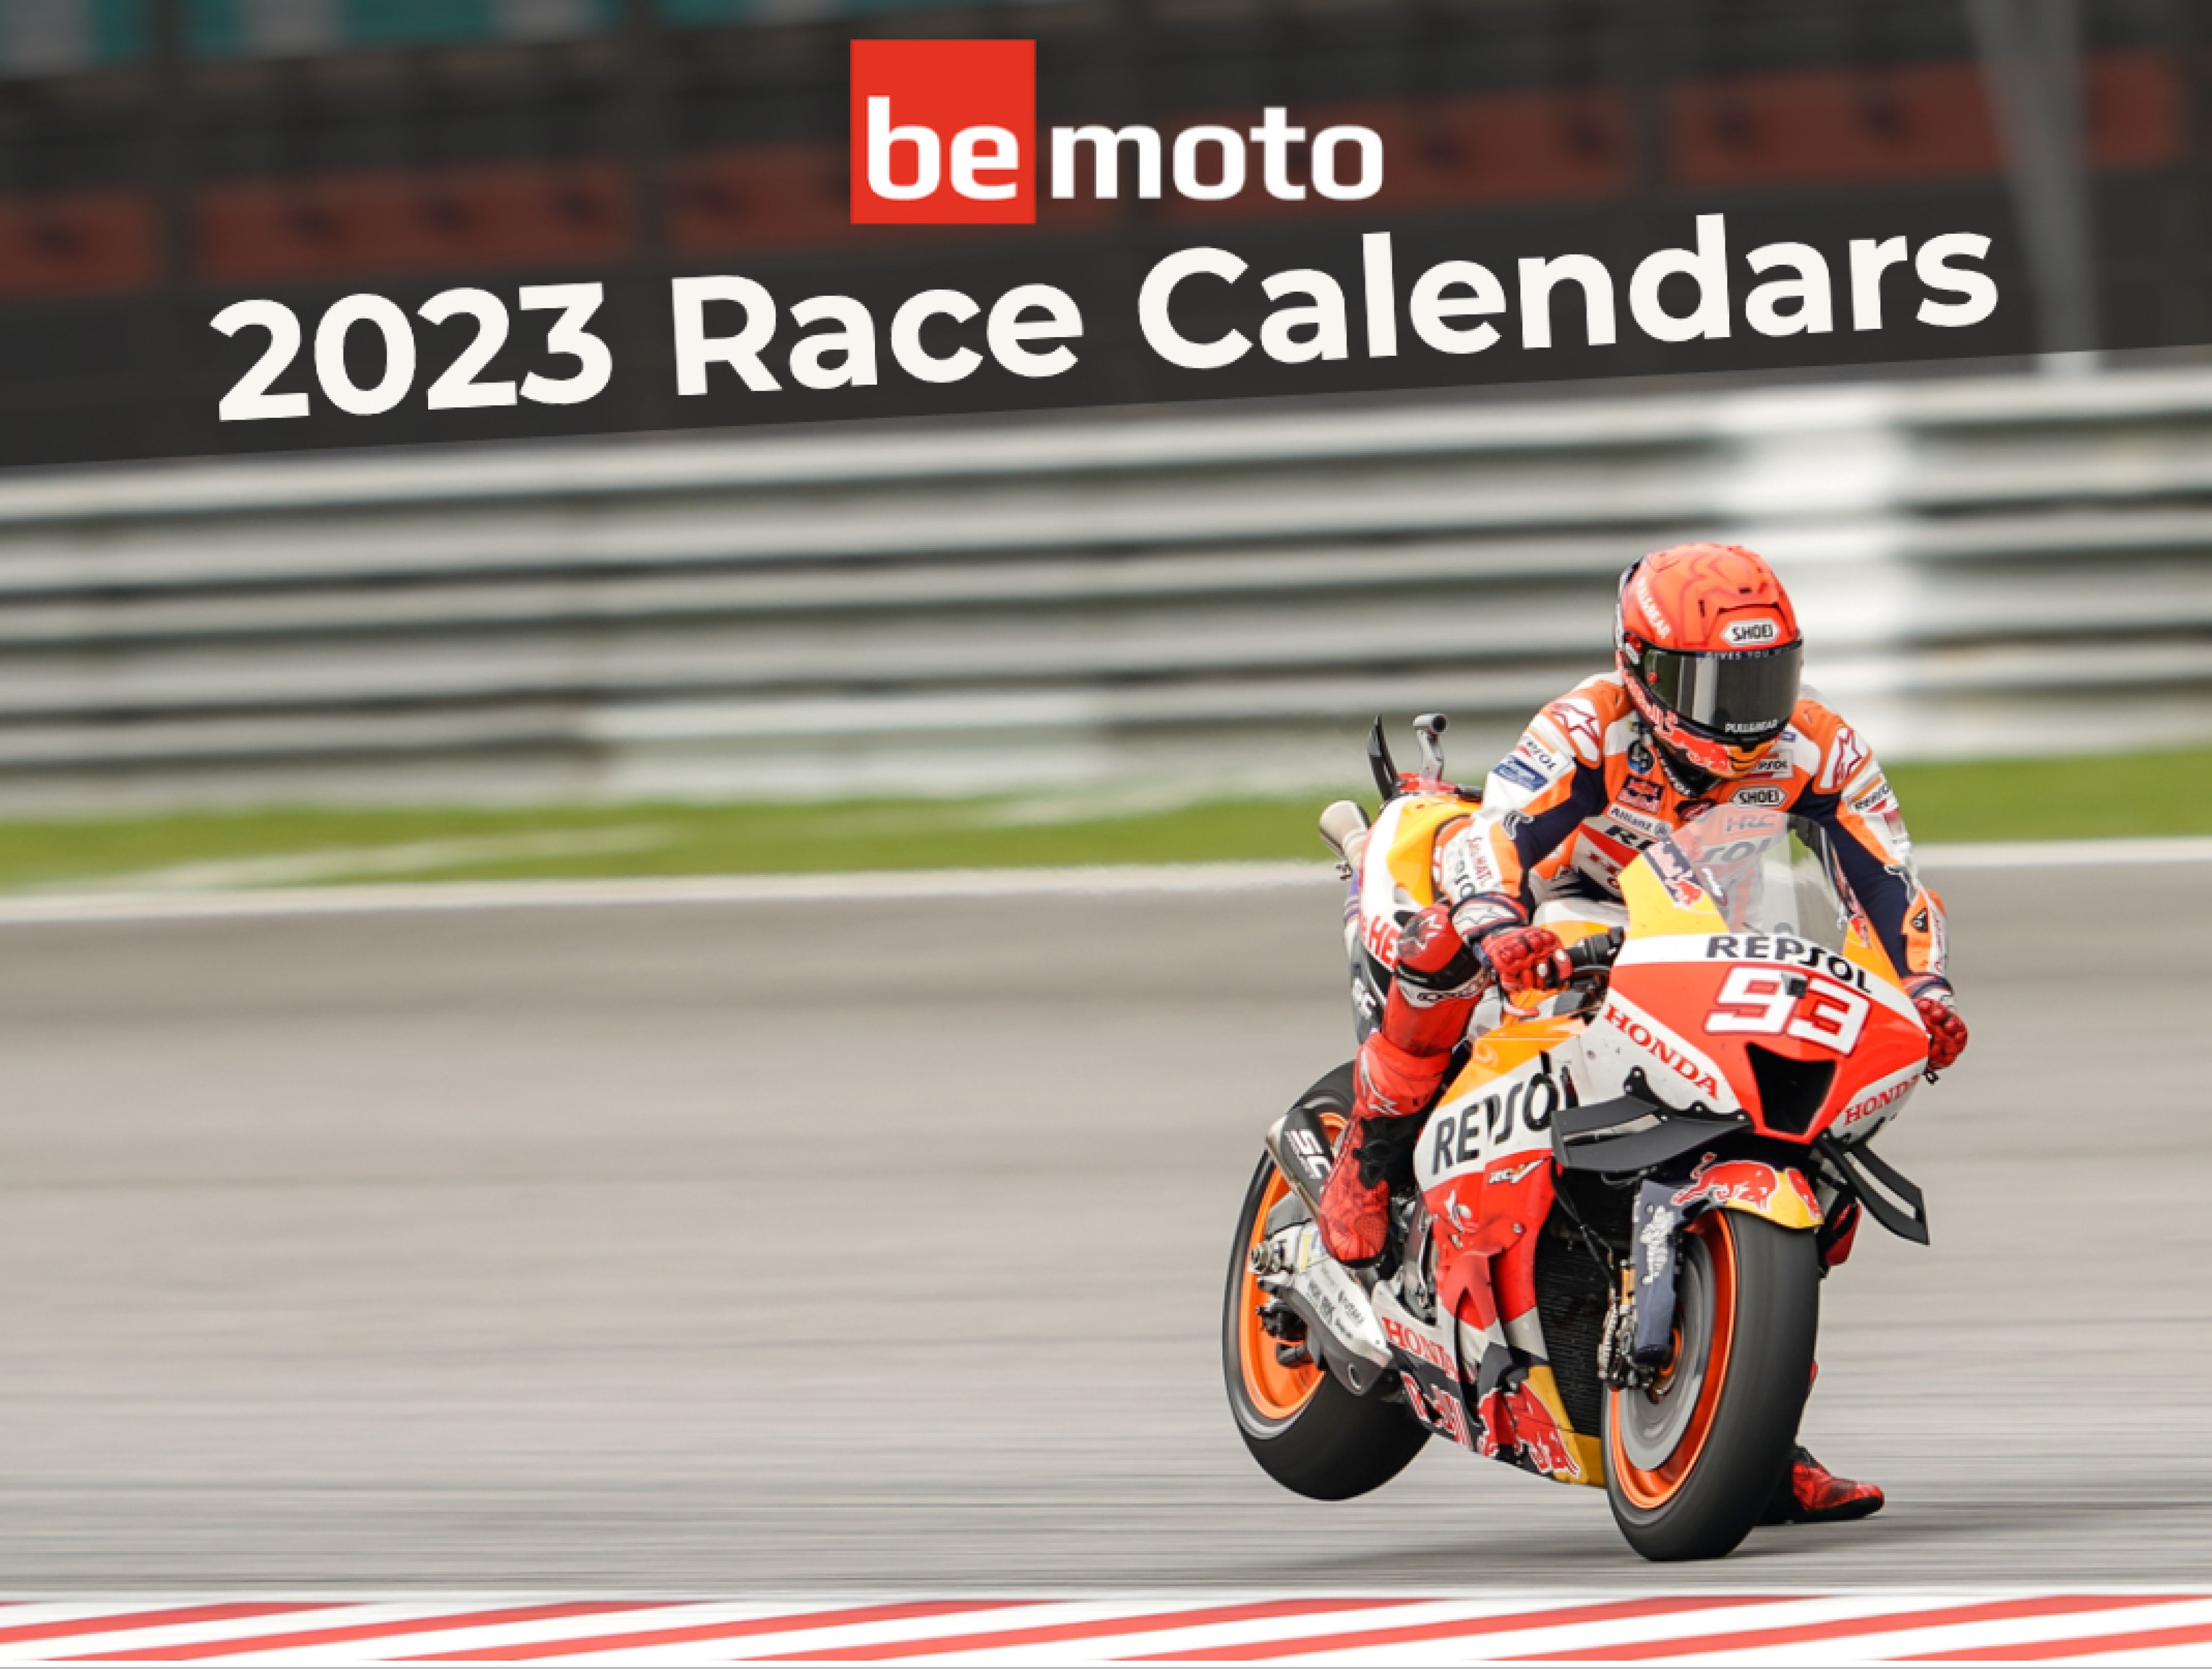 2023 Motorcycle Racing Calendar